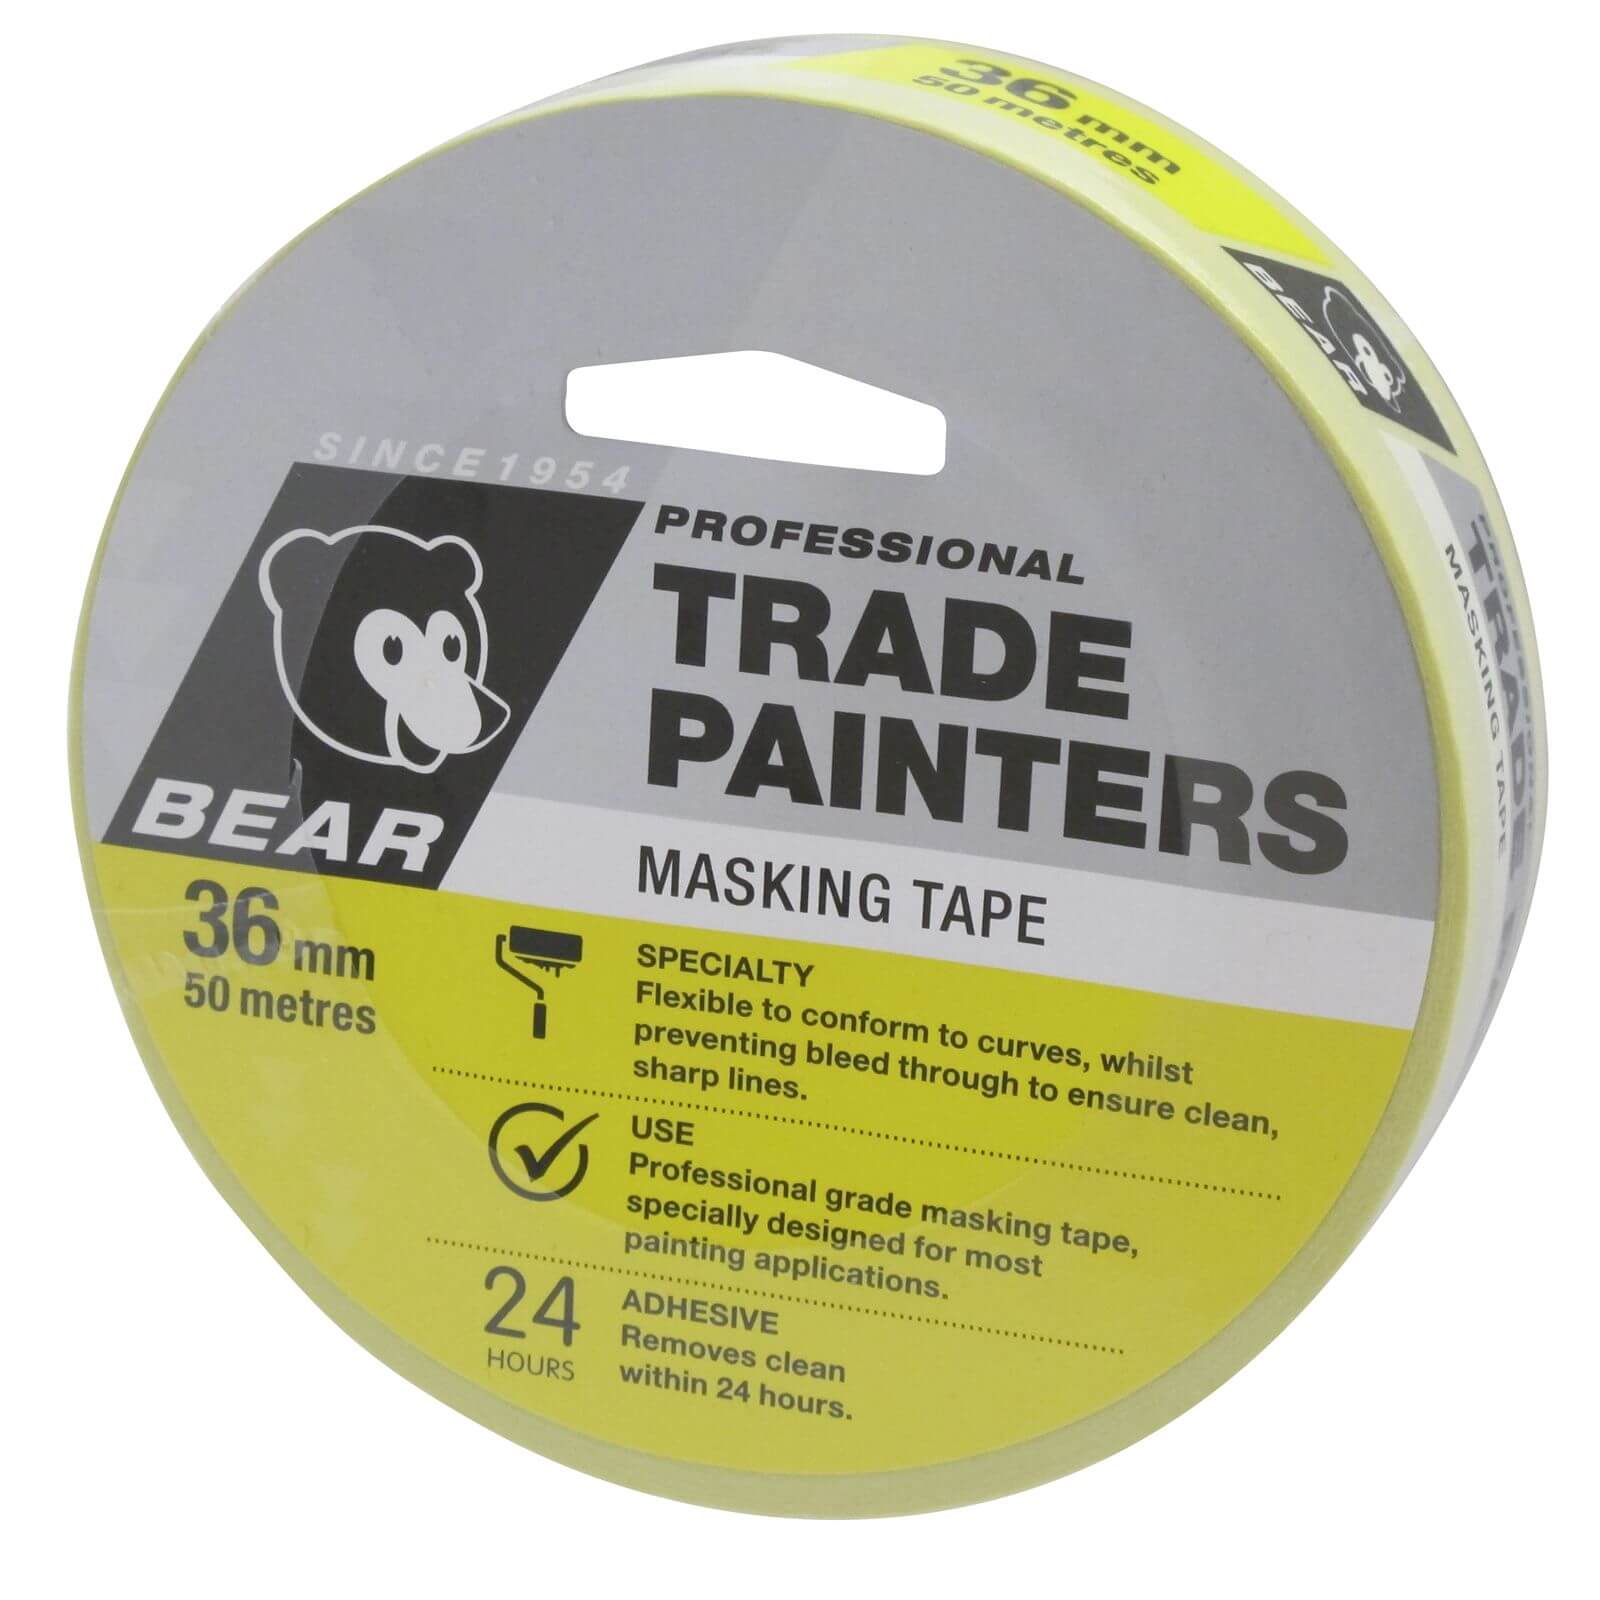 Bear 36mm x 50m Trade Painters Masking Tape